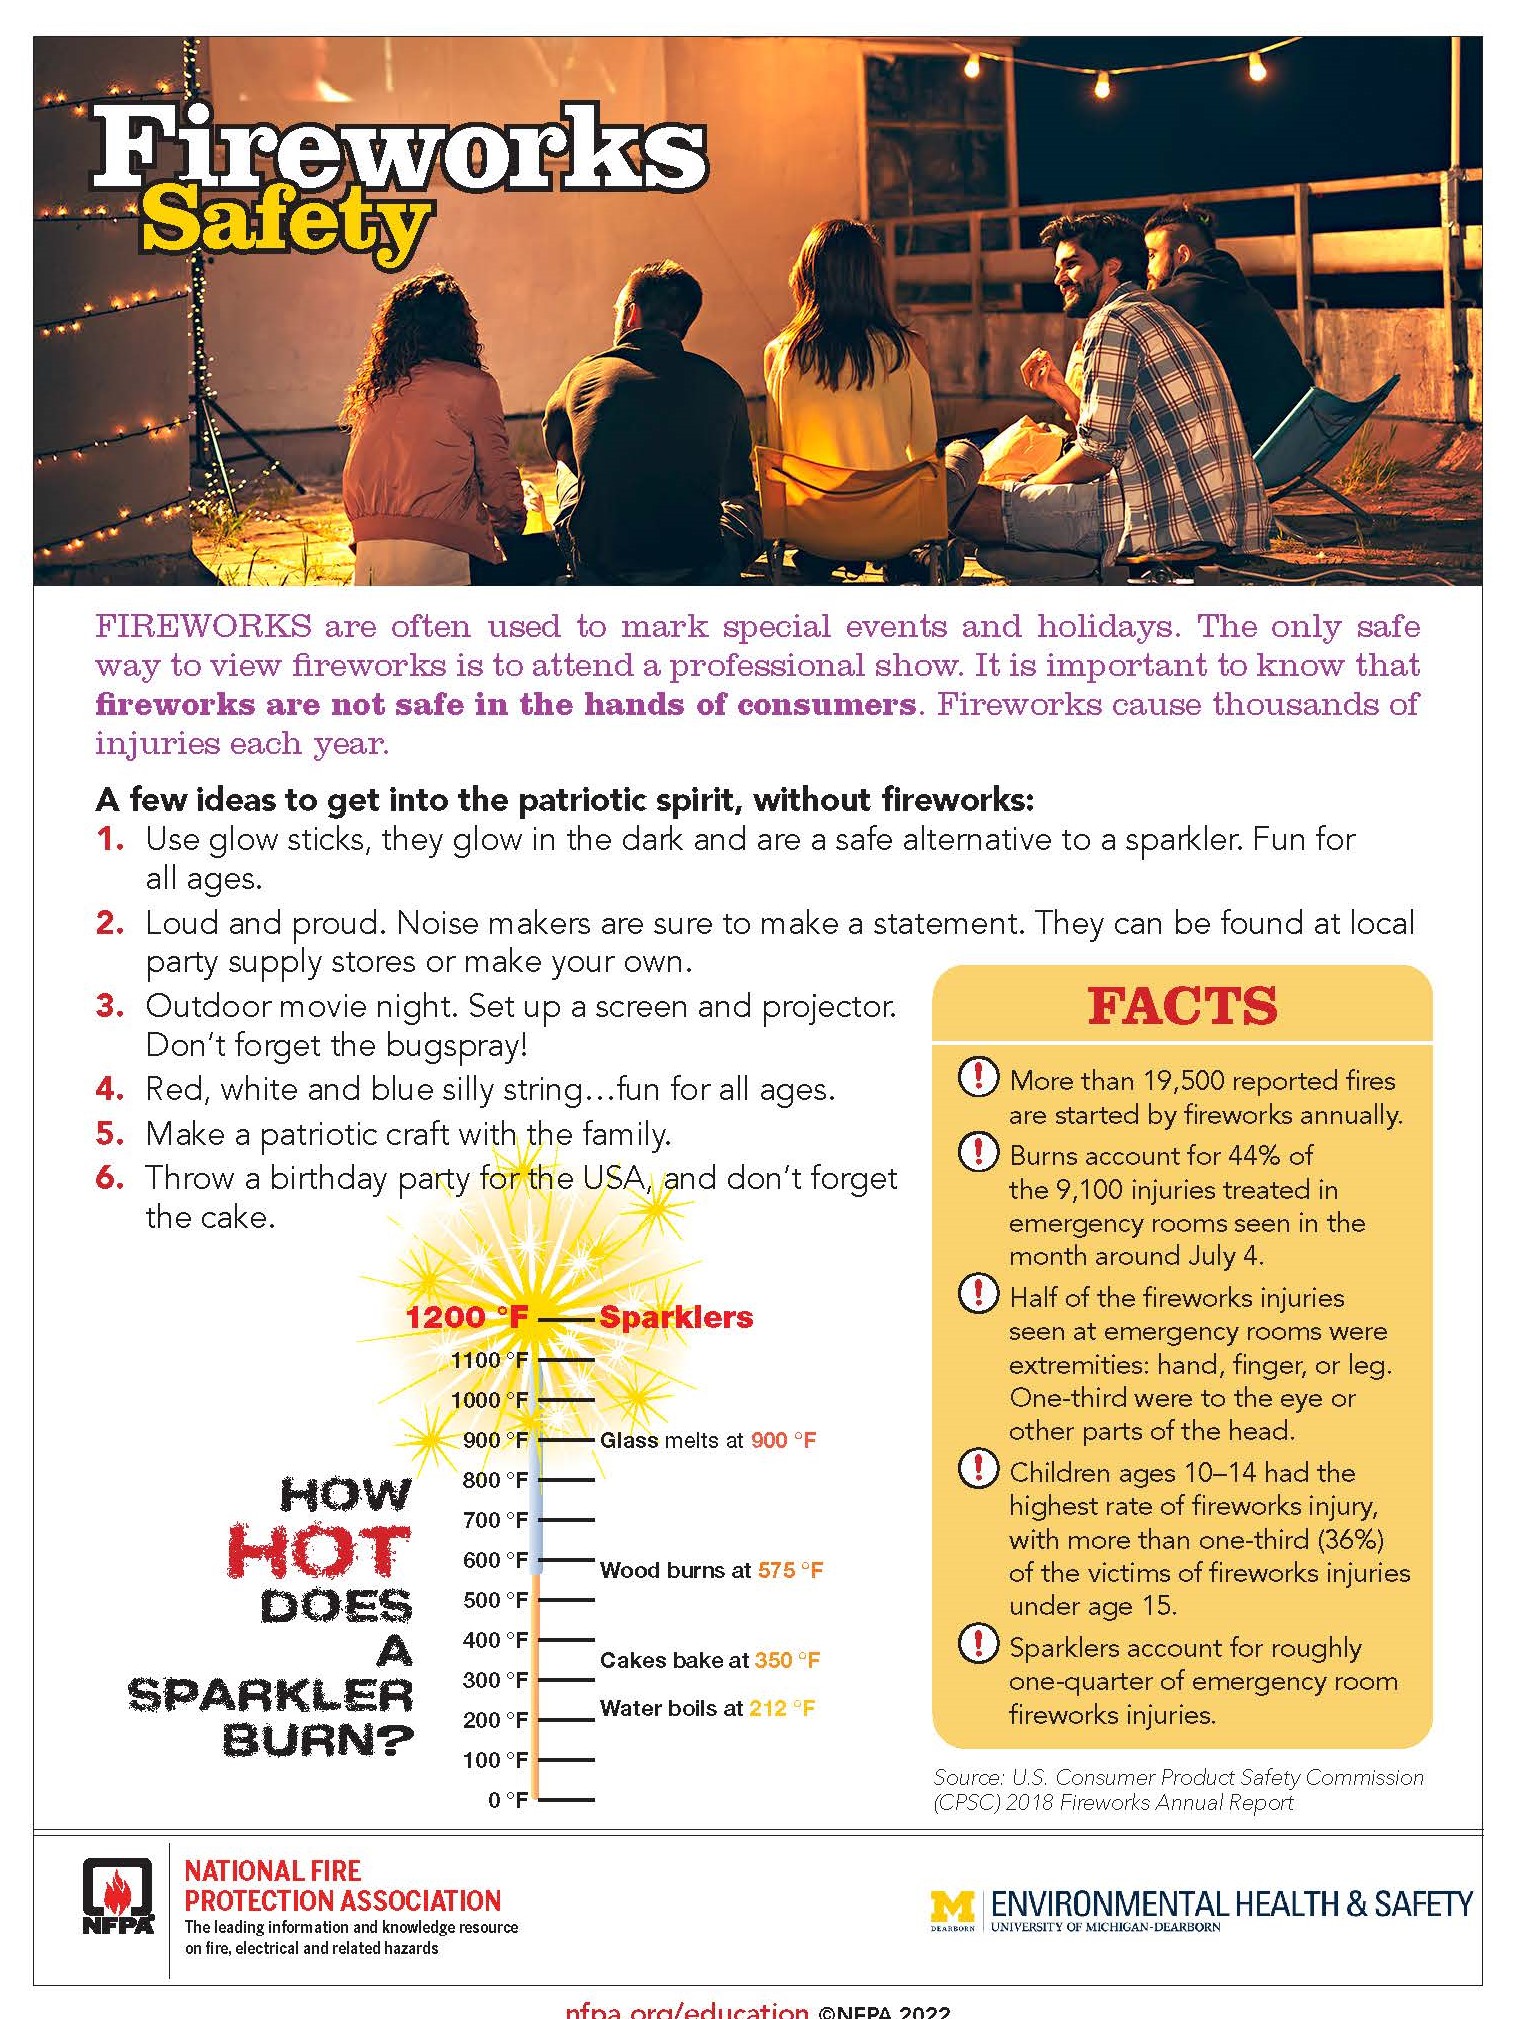 Fireworks safety flyer.